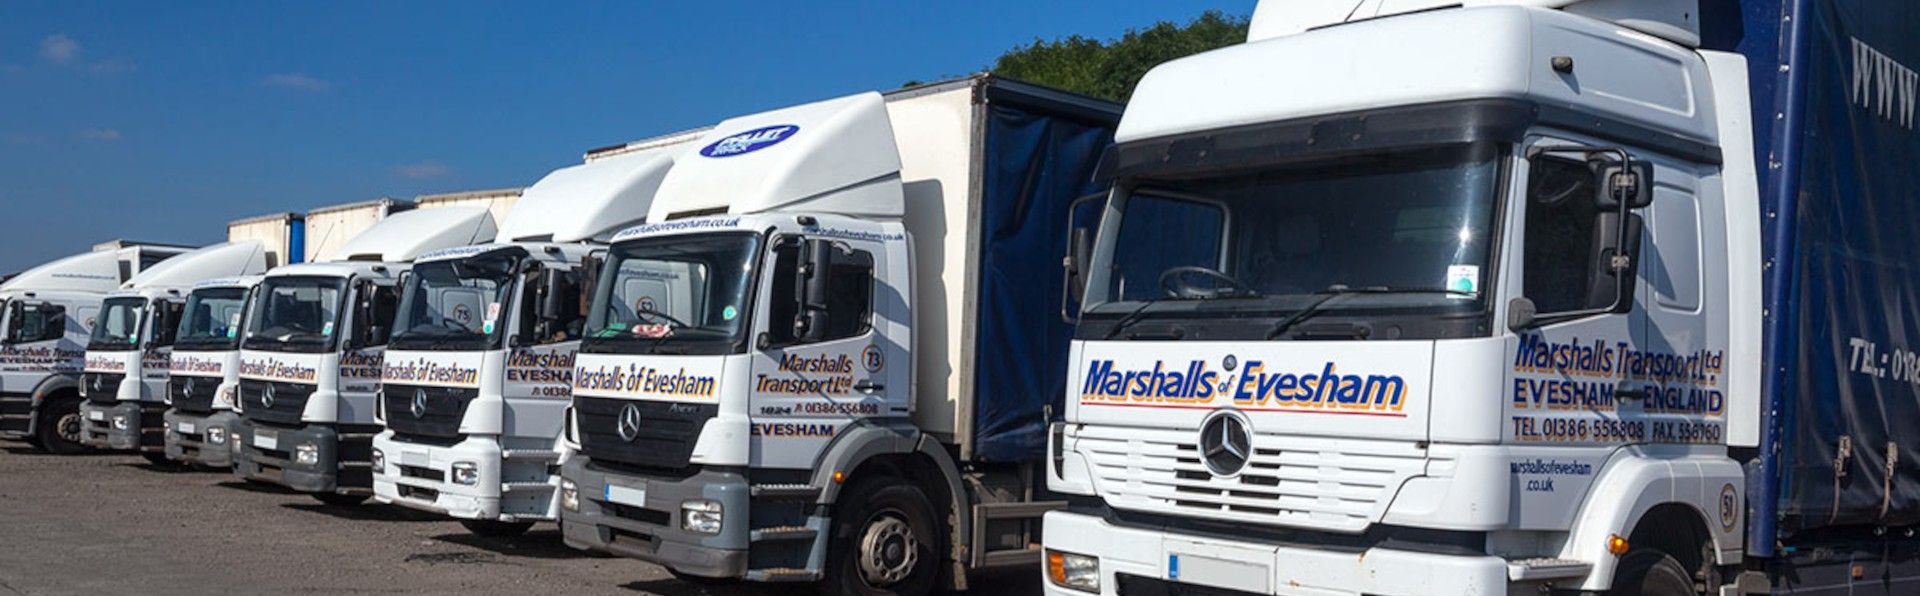 A row of Marshalls Transport Lorries